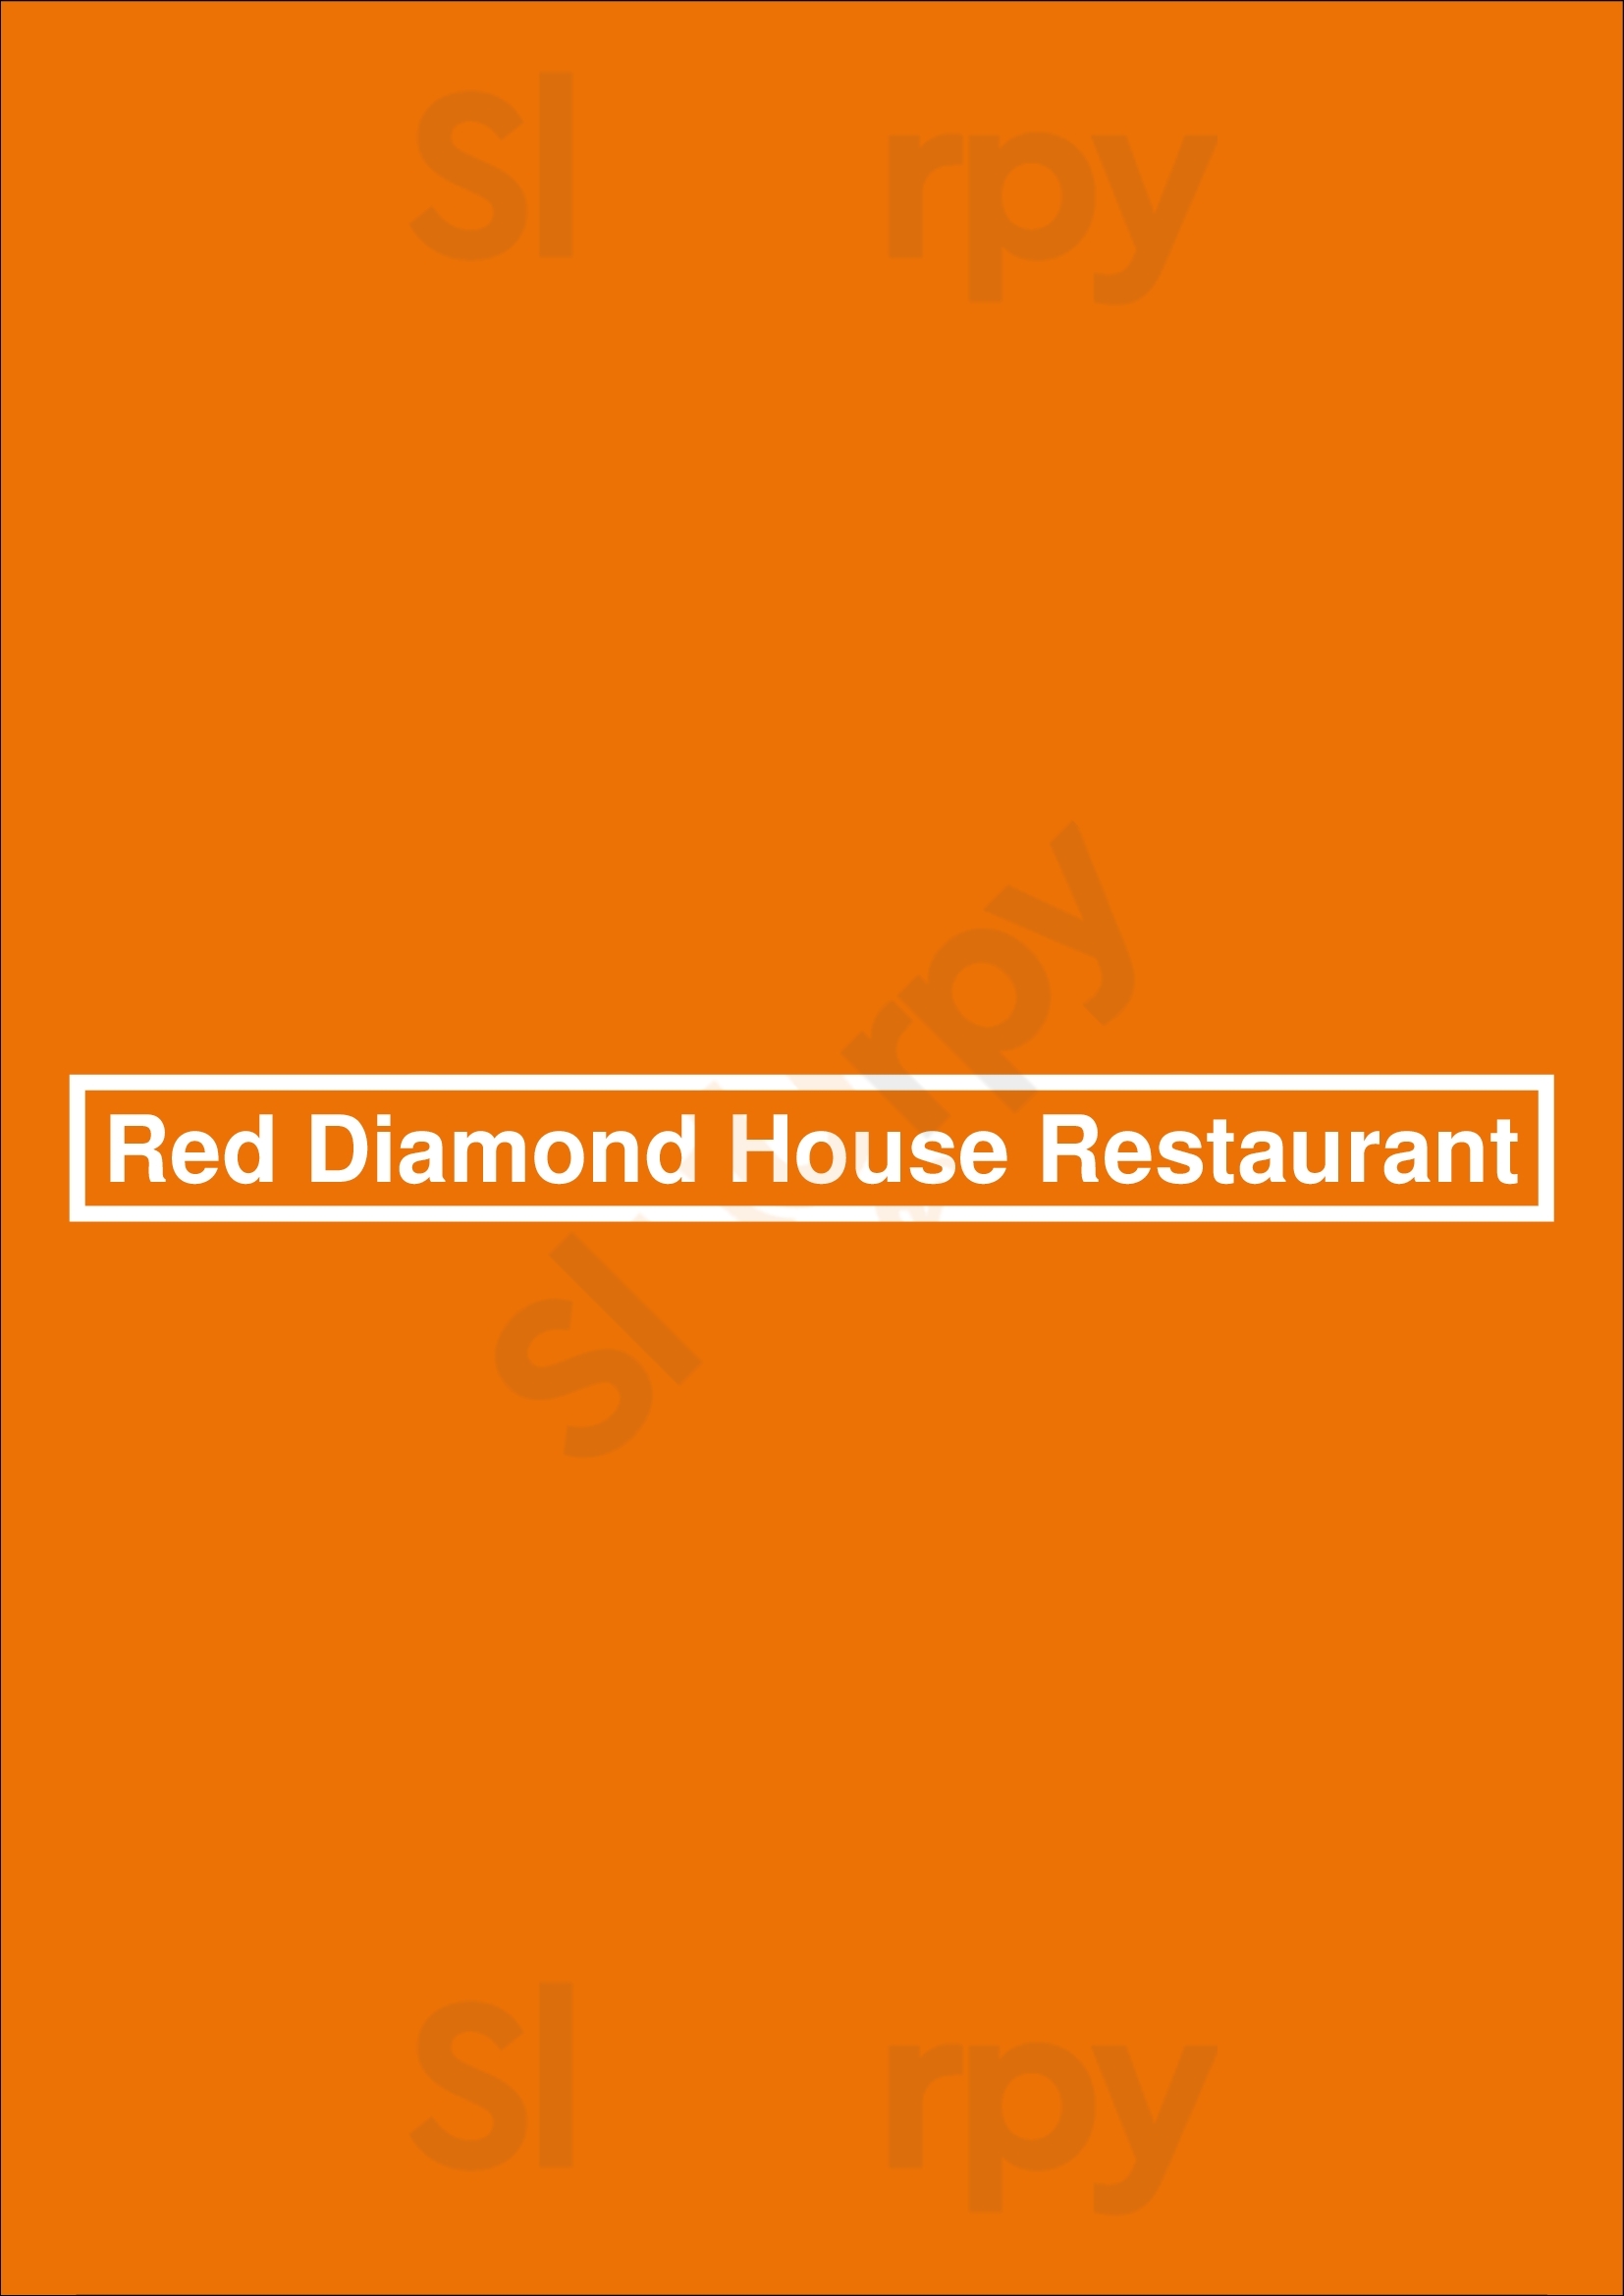 Red Diamond House Restaurant Edmonton Menu - 1